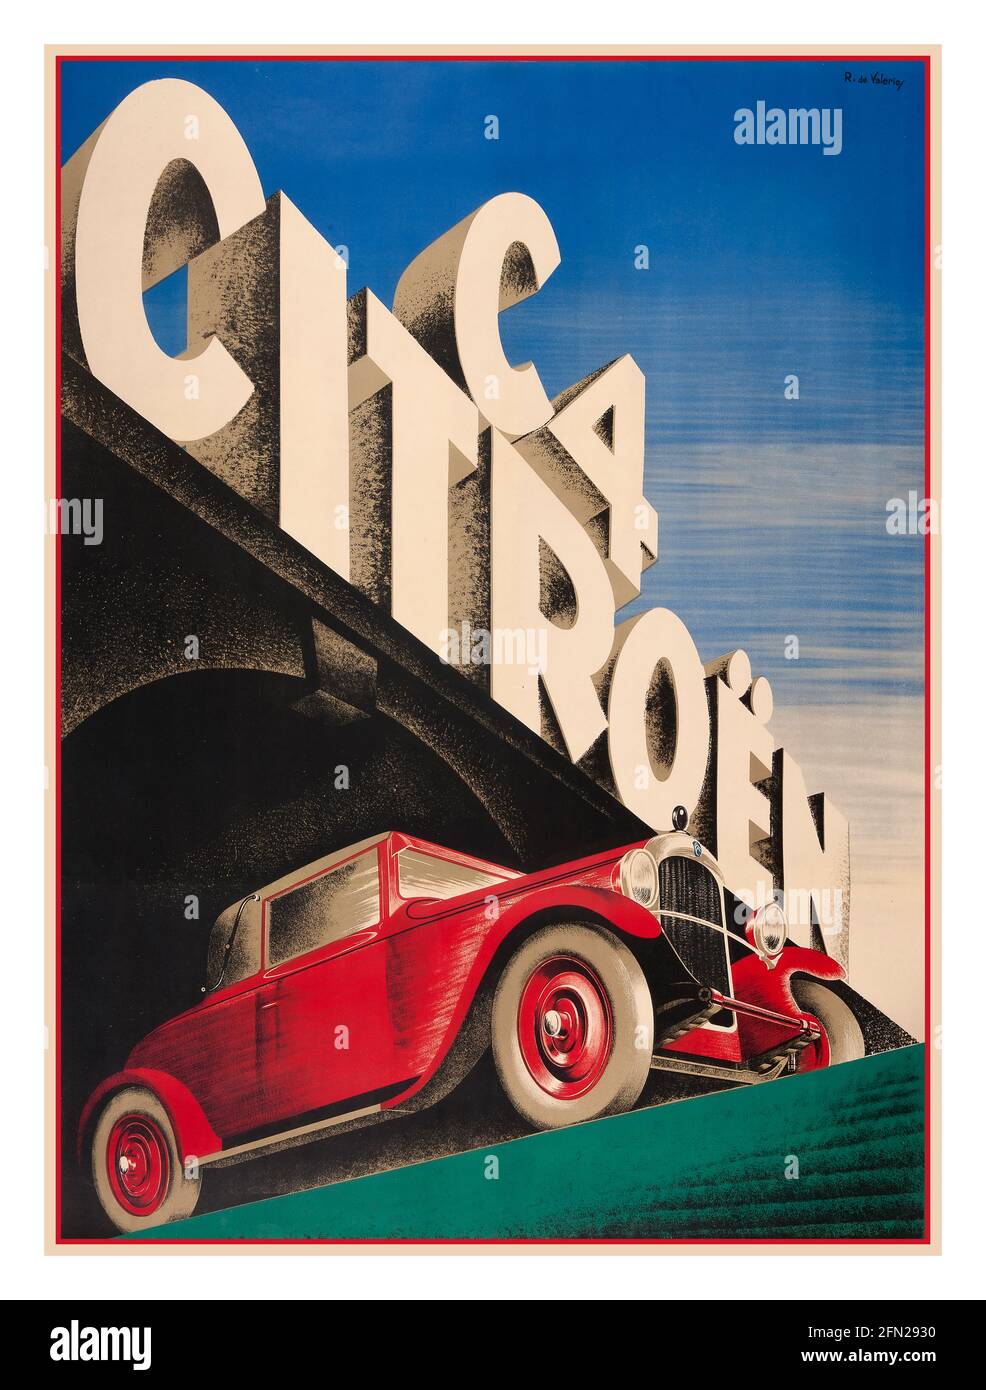 CITROEN C4 French 1920's Art Deco Vintage Automobile Poster francese per auto 'Citroen C4' di Roger de Valerio, 1928 ' Poster d'epoca Foto Stock